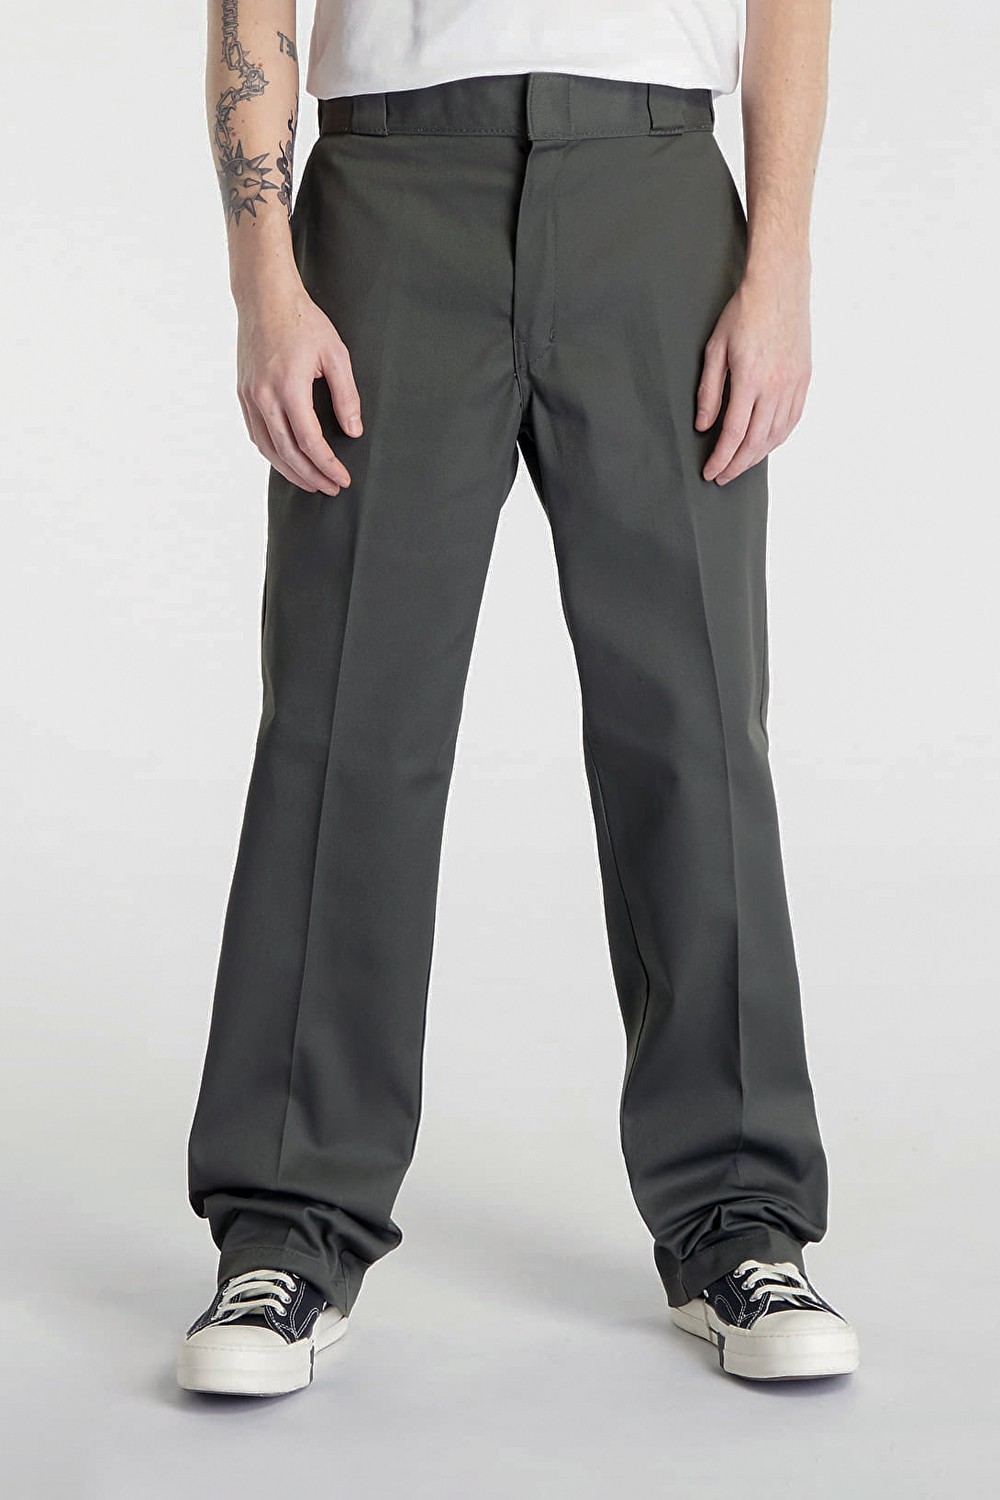 874 Grey Work Pants (DCKS2)